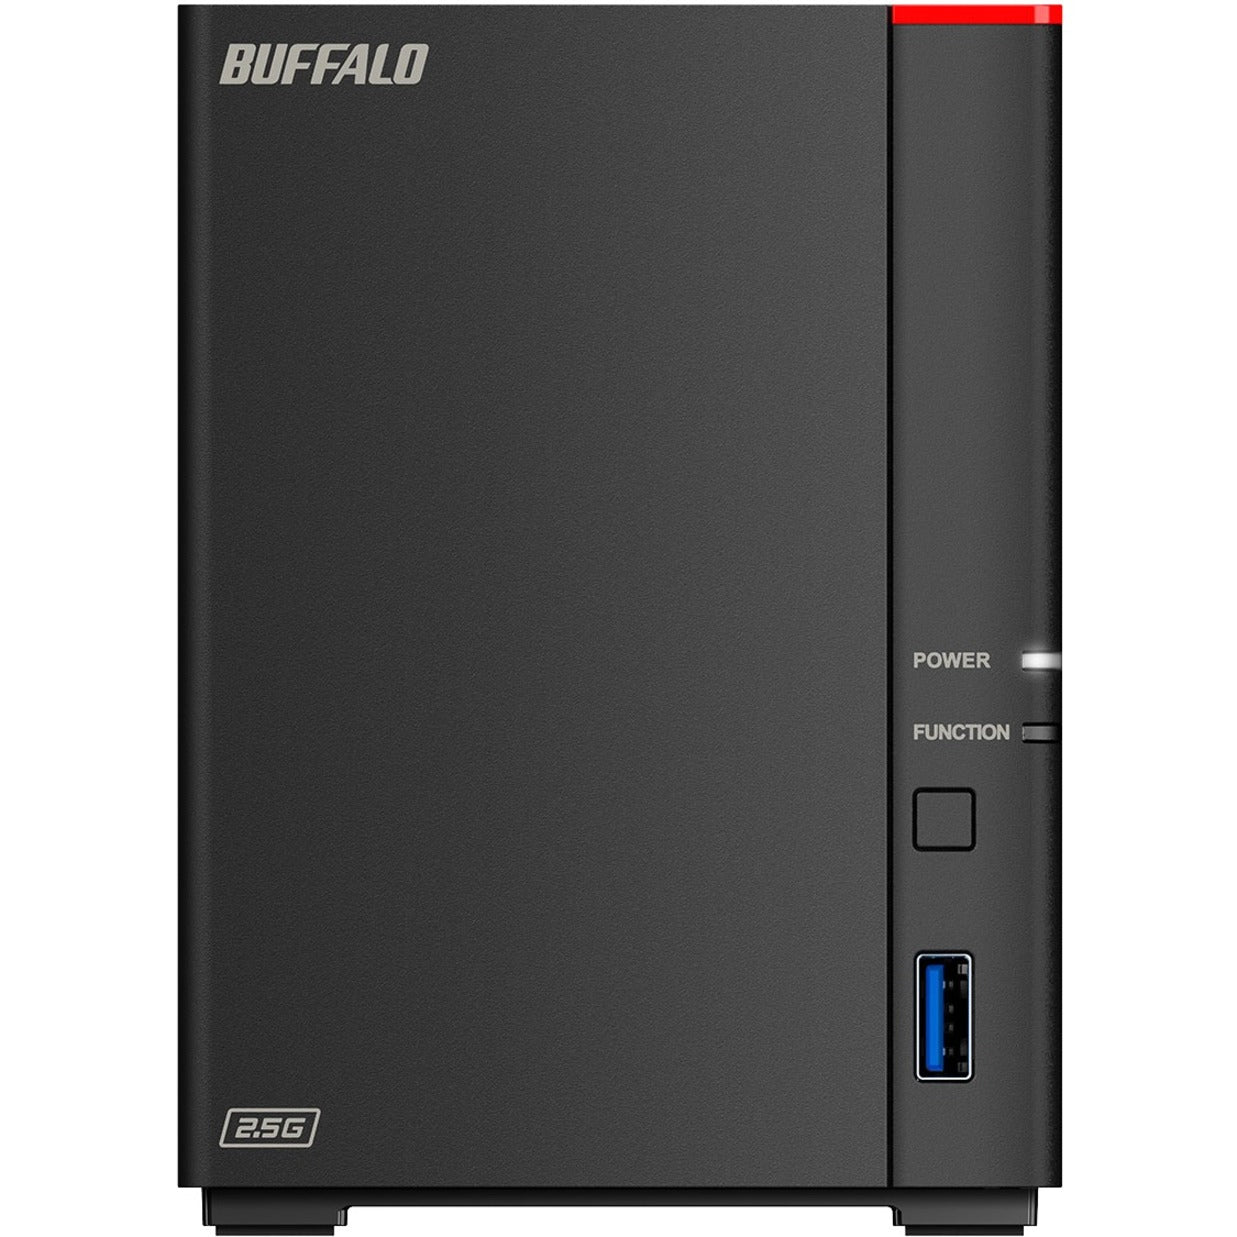 Buffalo LS720D0402 LinkStation 720D 4TB Hard Drives Included (2 x 2TB, 2 Bay), 2.5 Gigabit Ethernet, Hexa-core (6 Core) Processor, 2 GB Memory, 2 Year Warranty